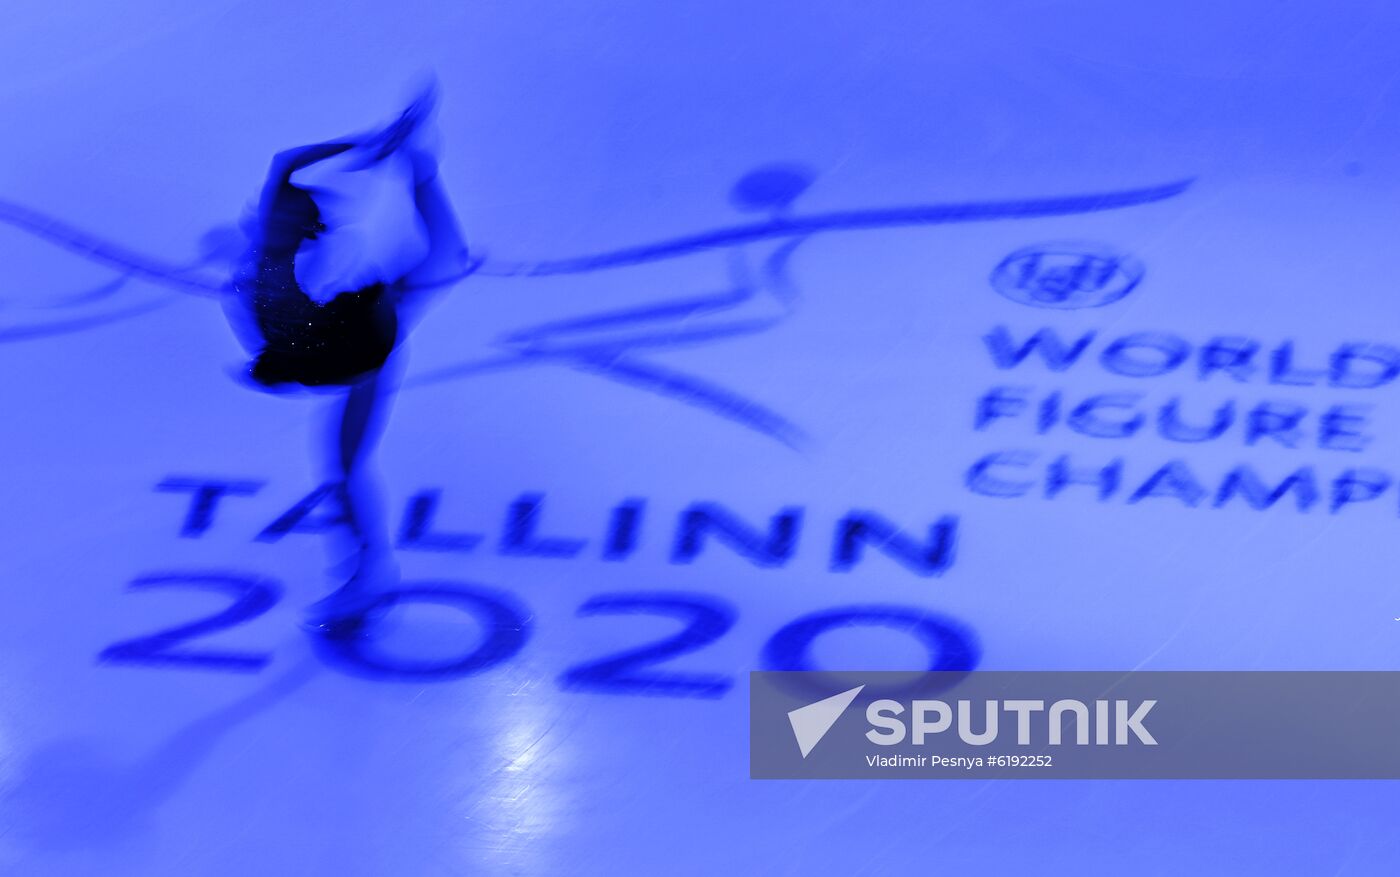 Estonia Figure Skating Worlds Junior Exhibition